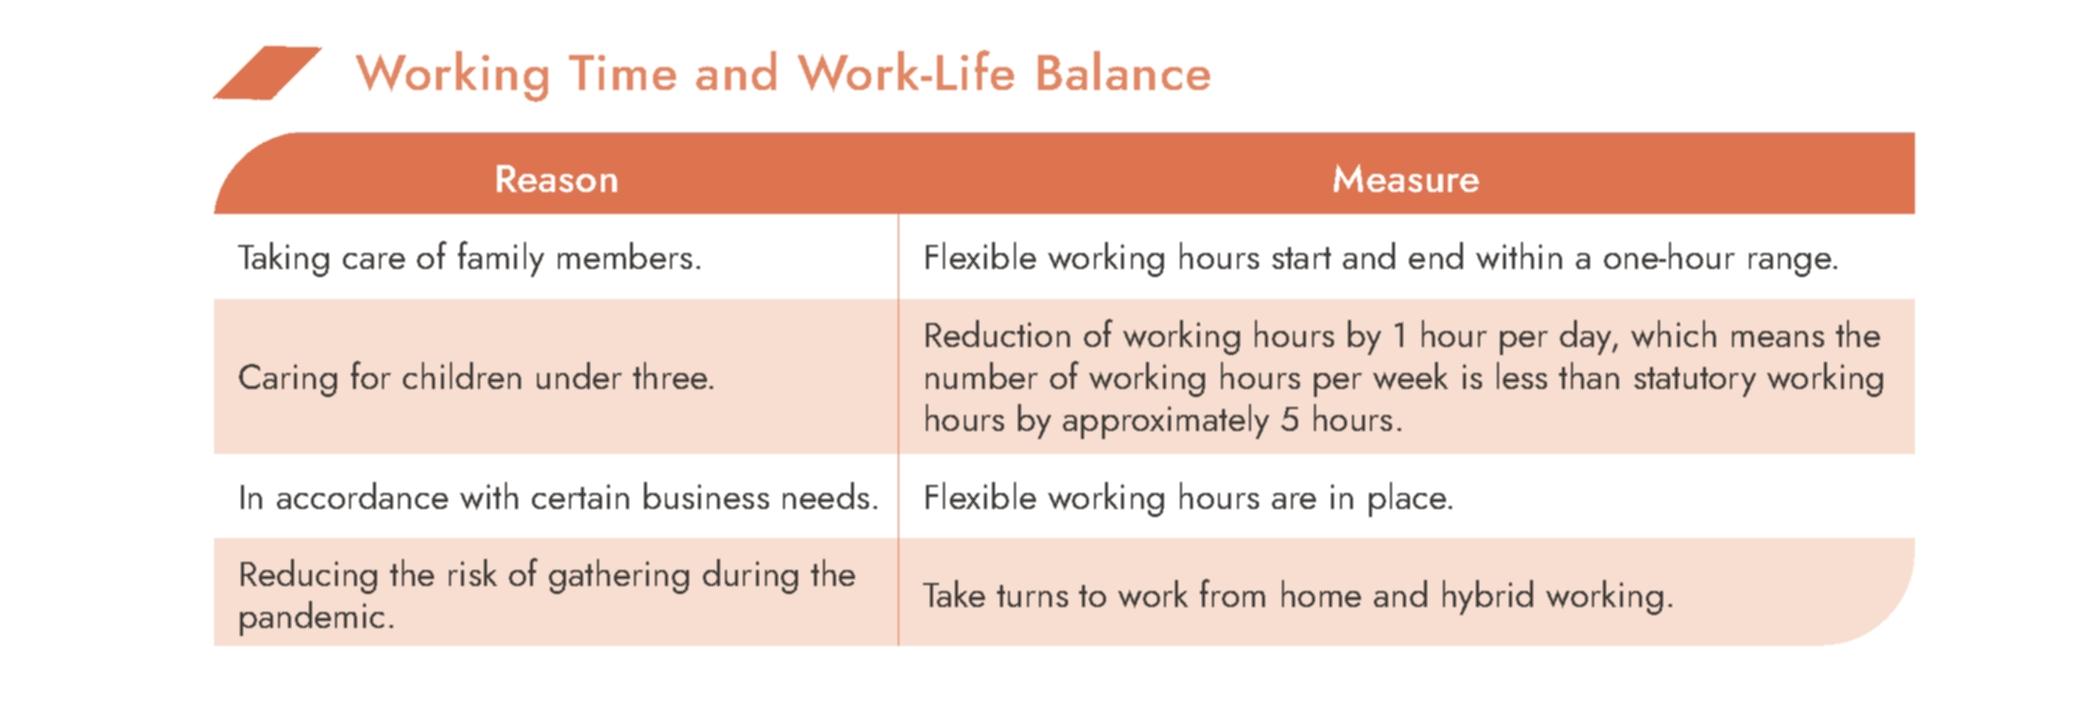 Working Time and Work-Life Balance